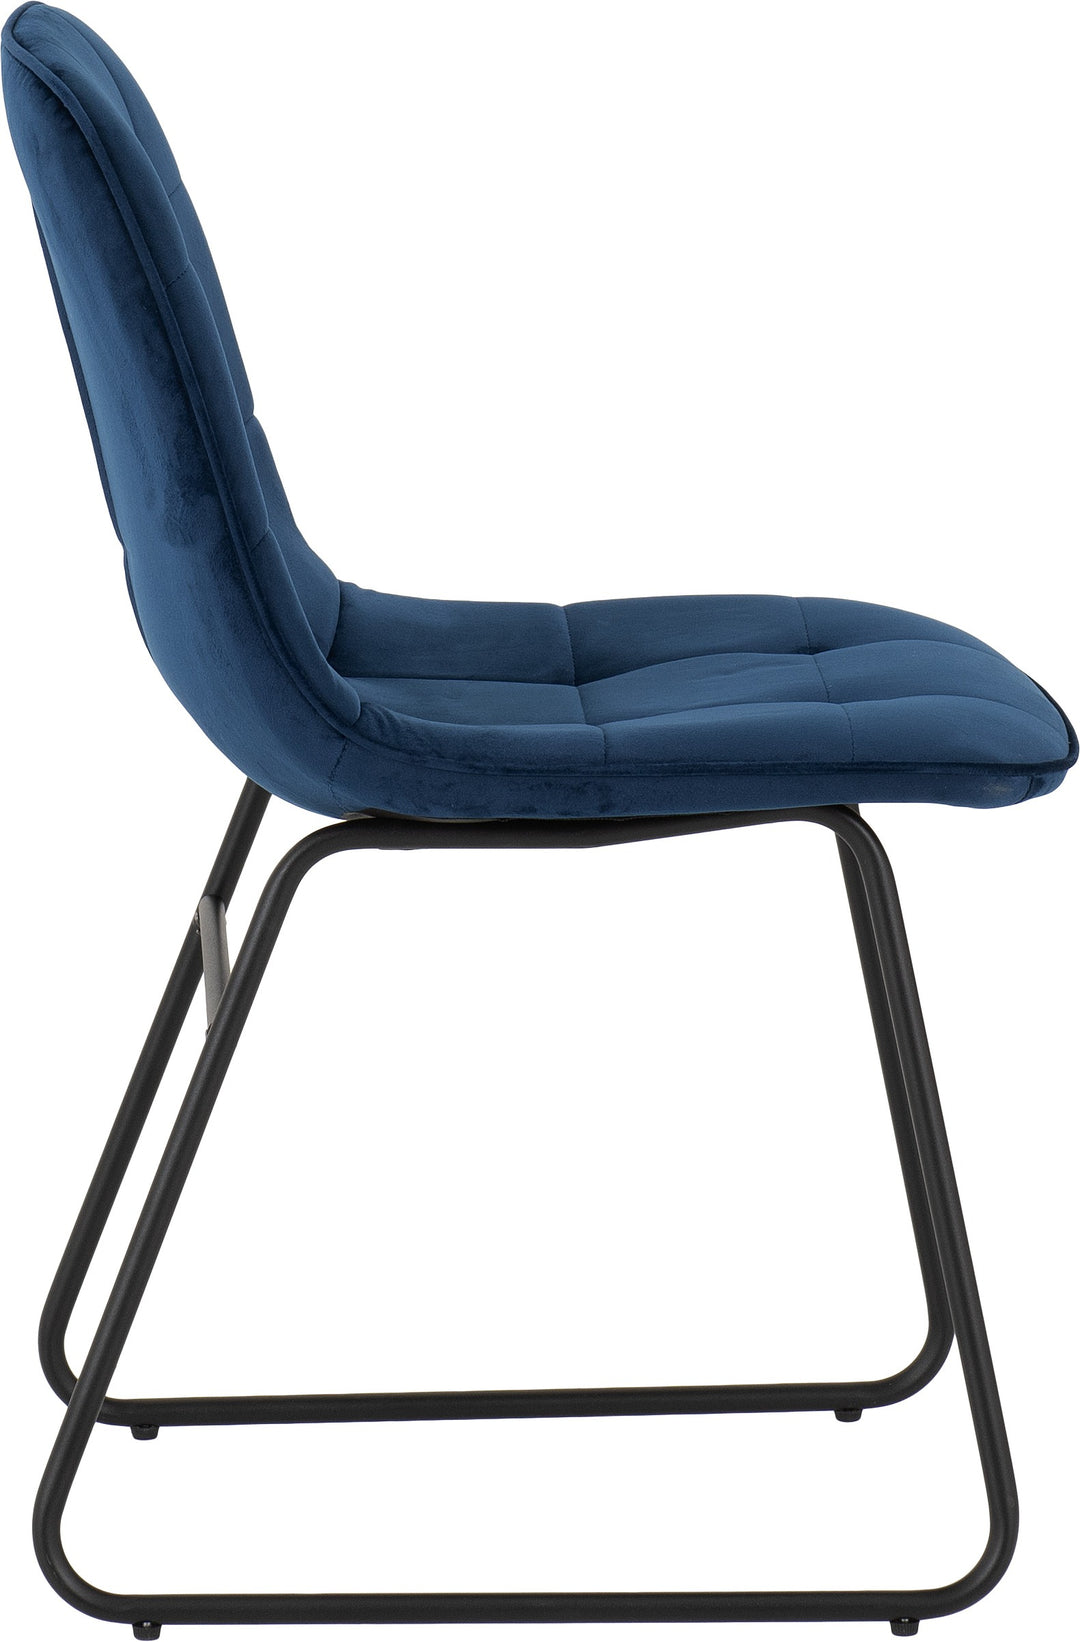 Athens Round & Lukas Dining Set (X4 Chairs) - Concrete/Sapphire Blue Velvet